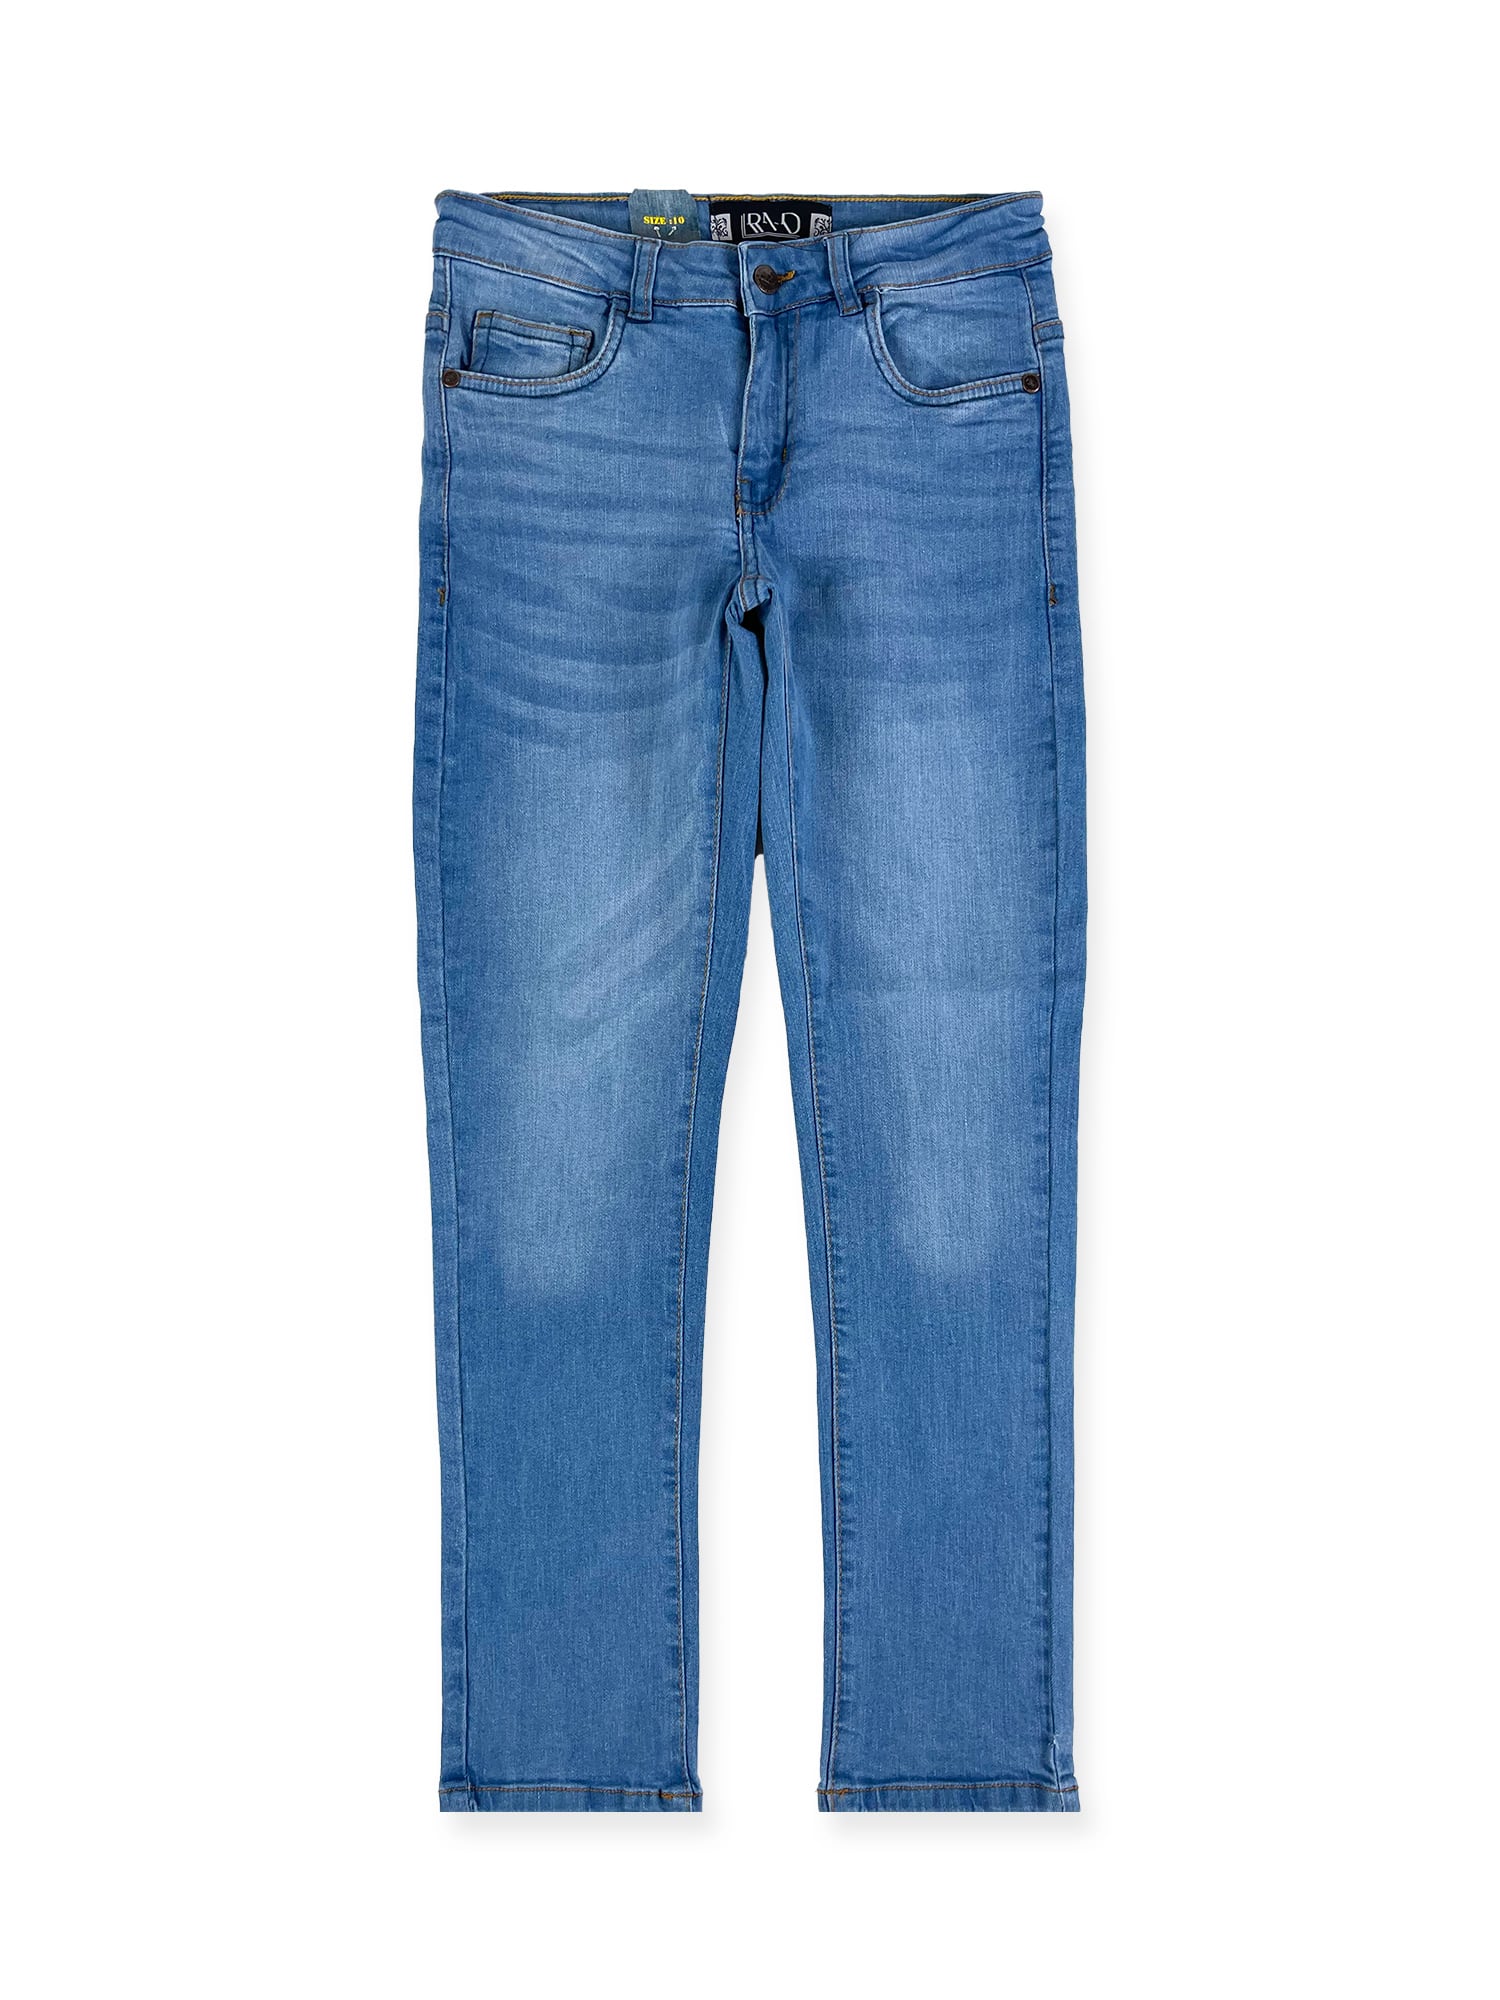 Pantalon de Mezclilla de Niño Corte Skinny (Docena) – Bargain Bazaar